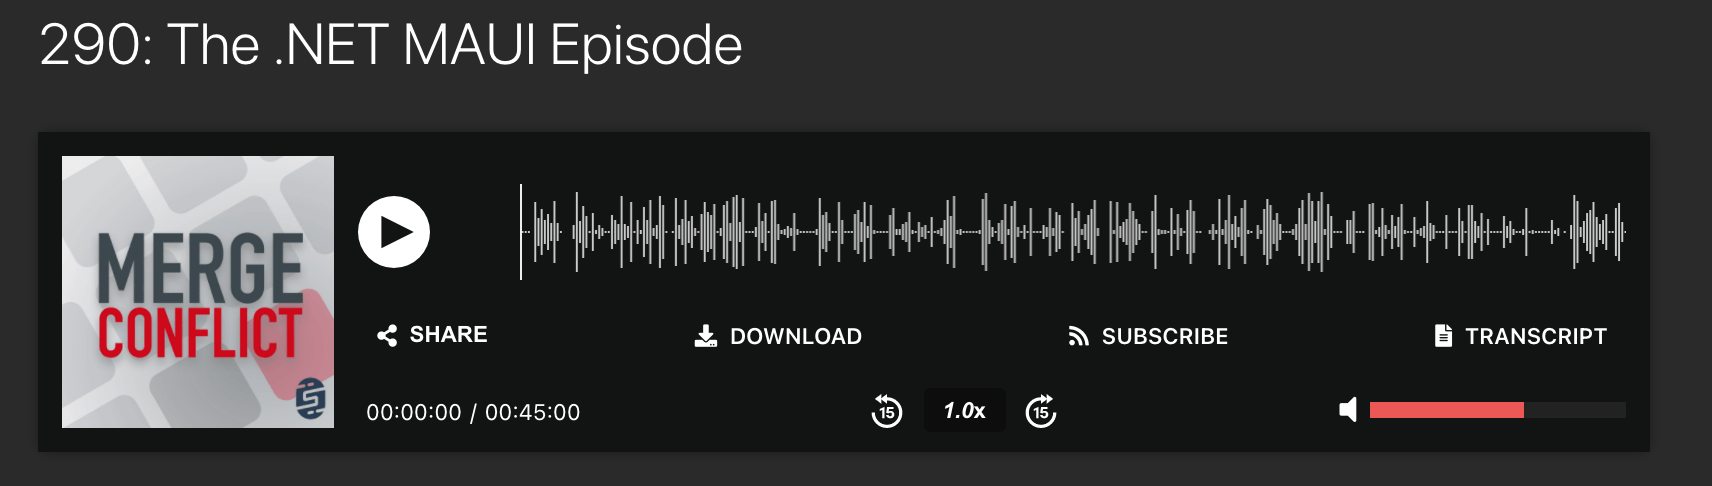 Merge Conflict Maui podcast screenshot